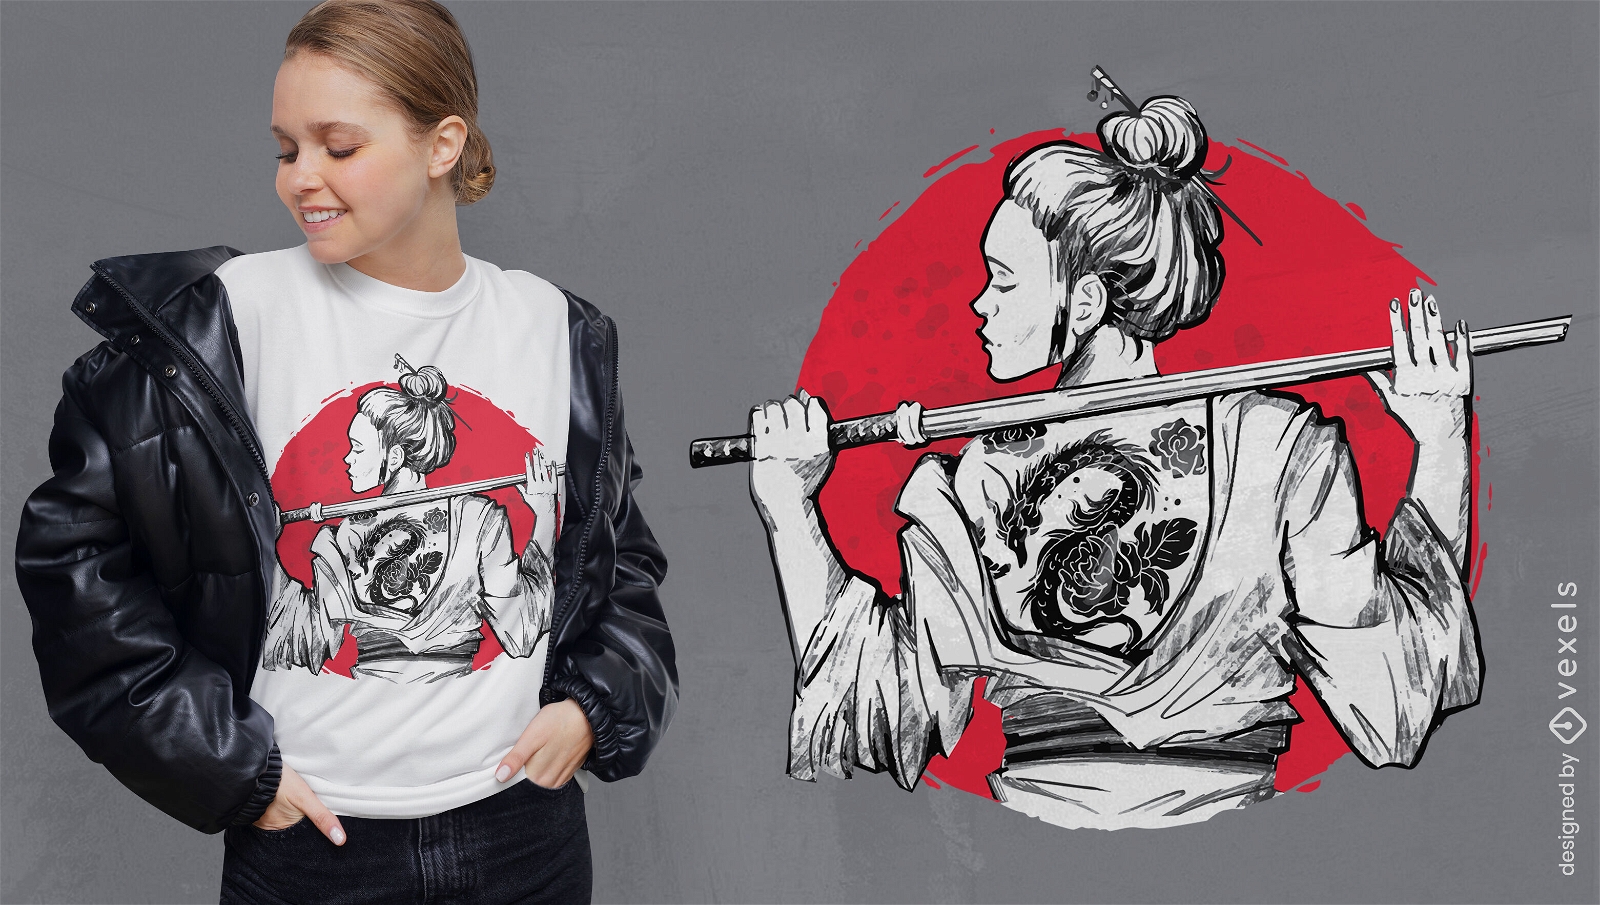 Samurai-M?dchen mit R?ckent?towierungs-T-Shirt-Design